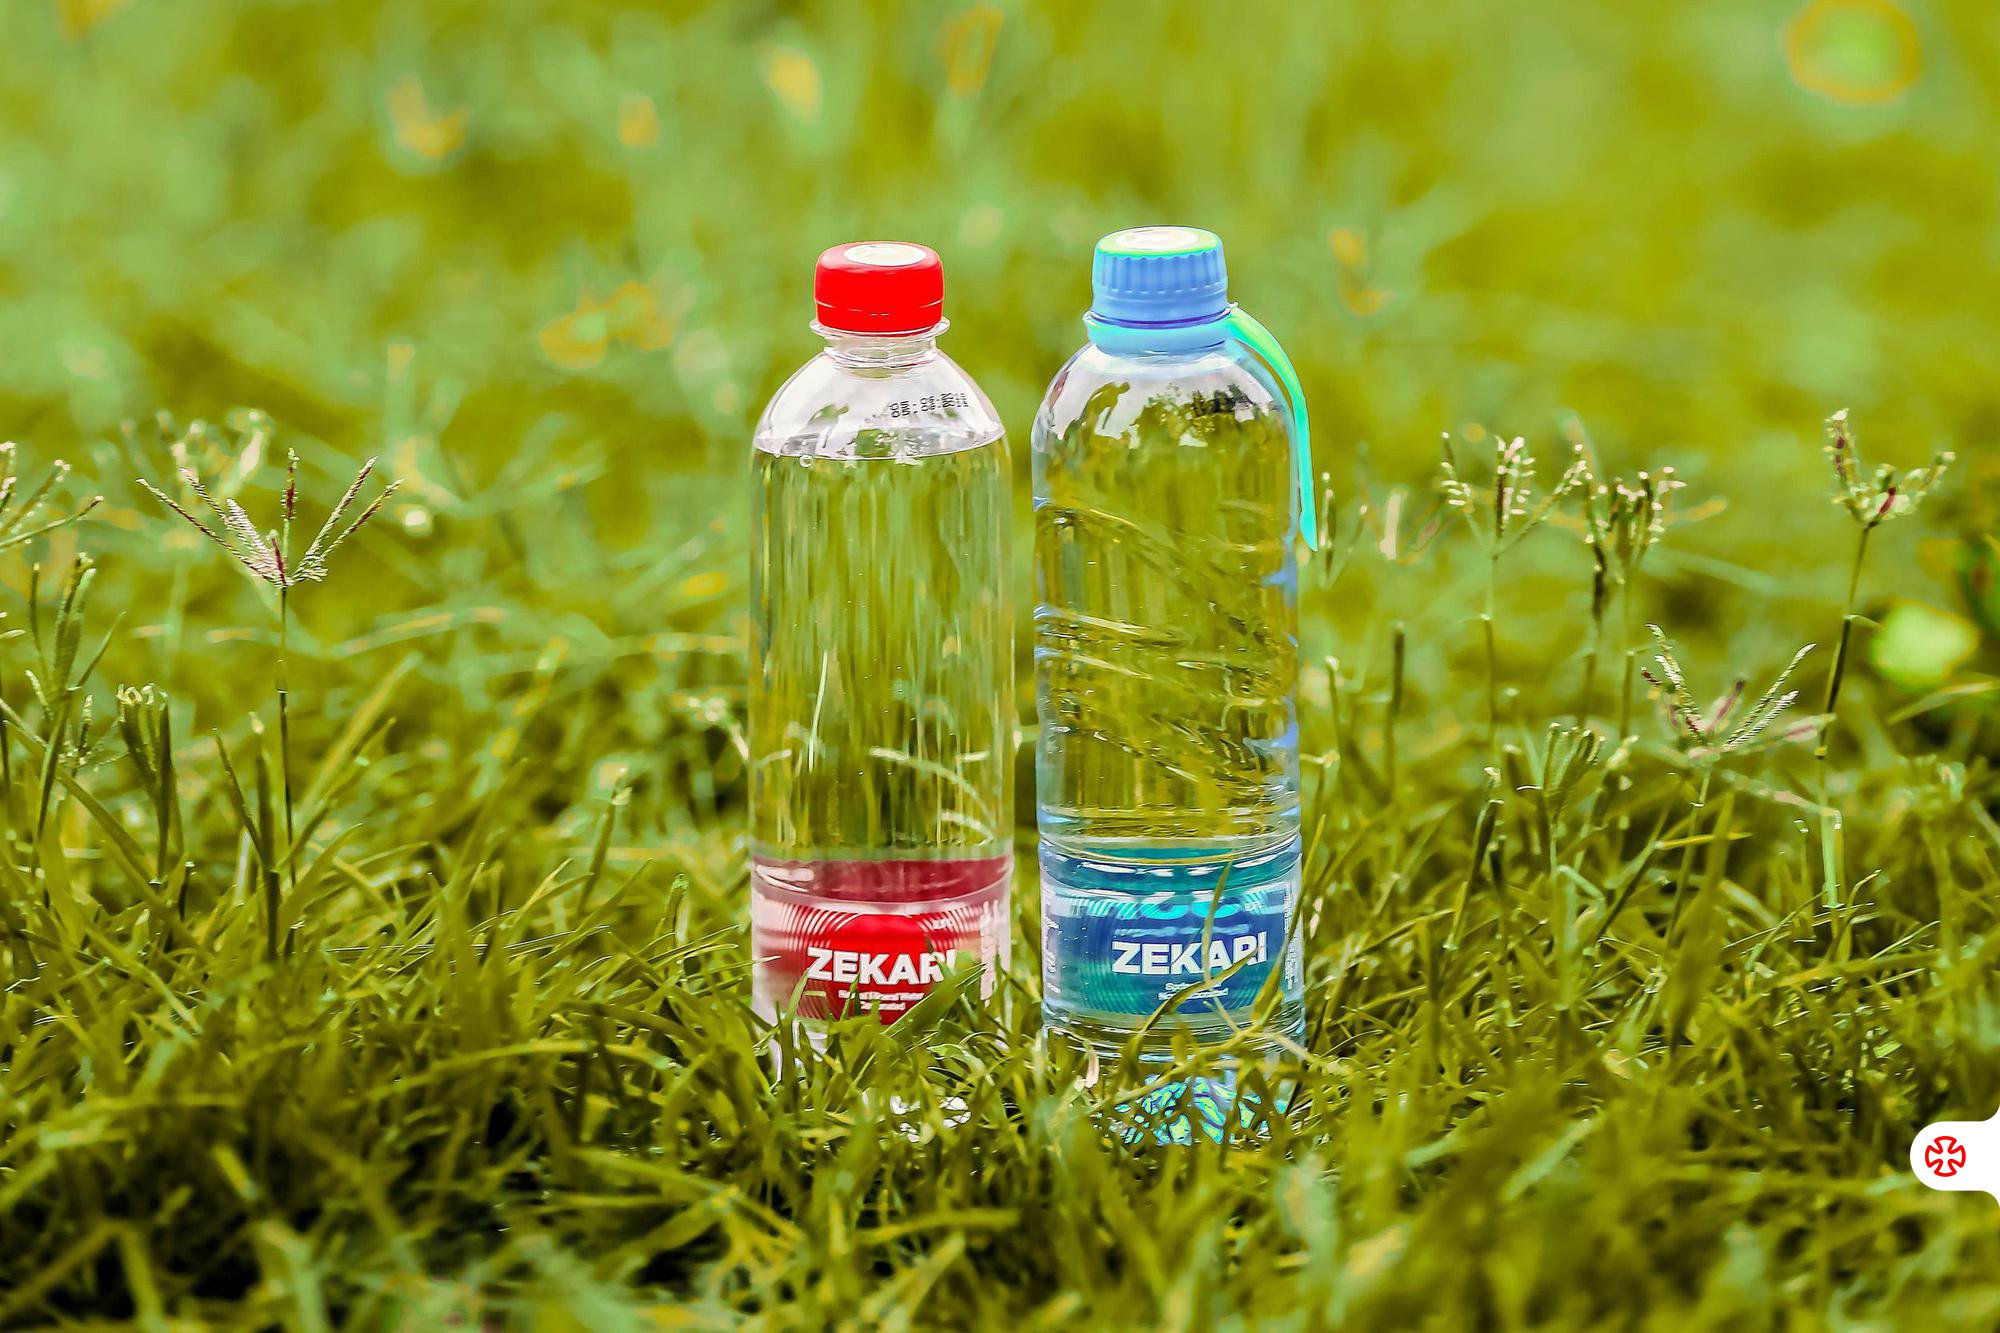 Bottles of Zekari Mineral Water